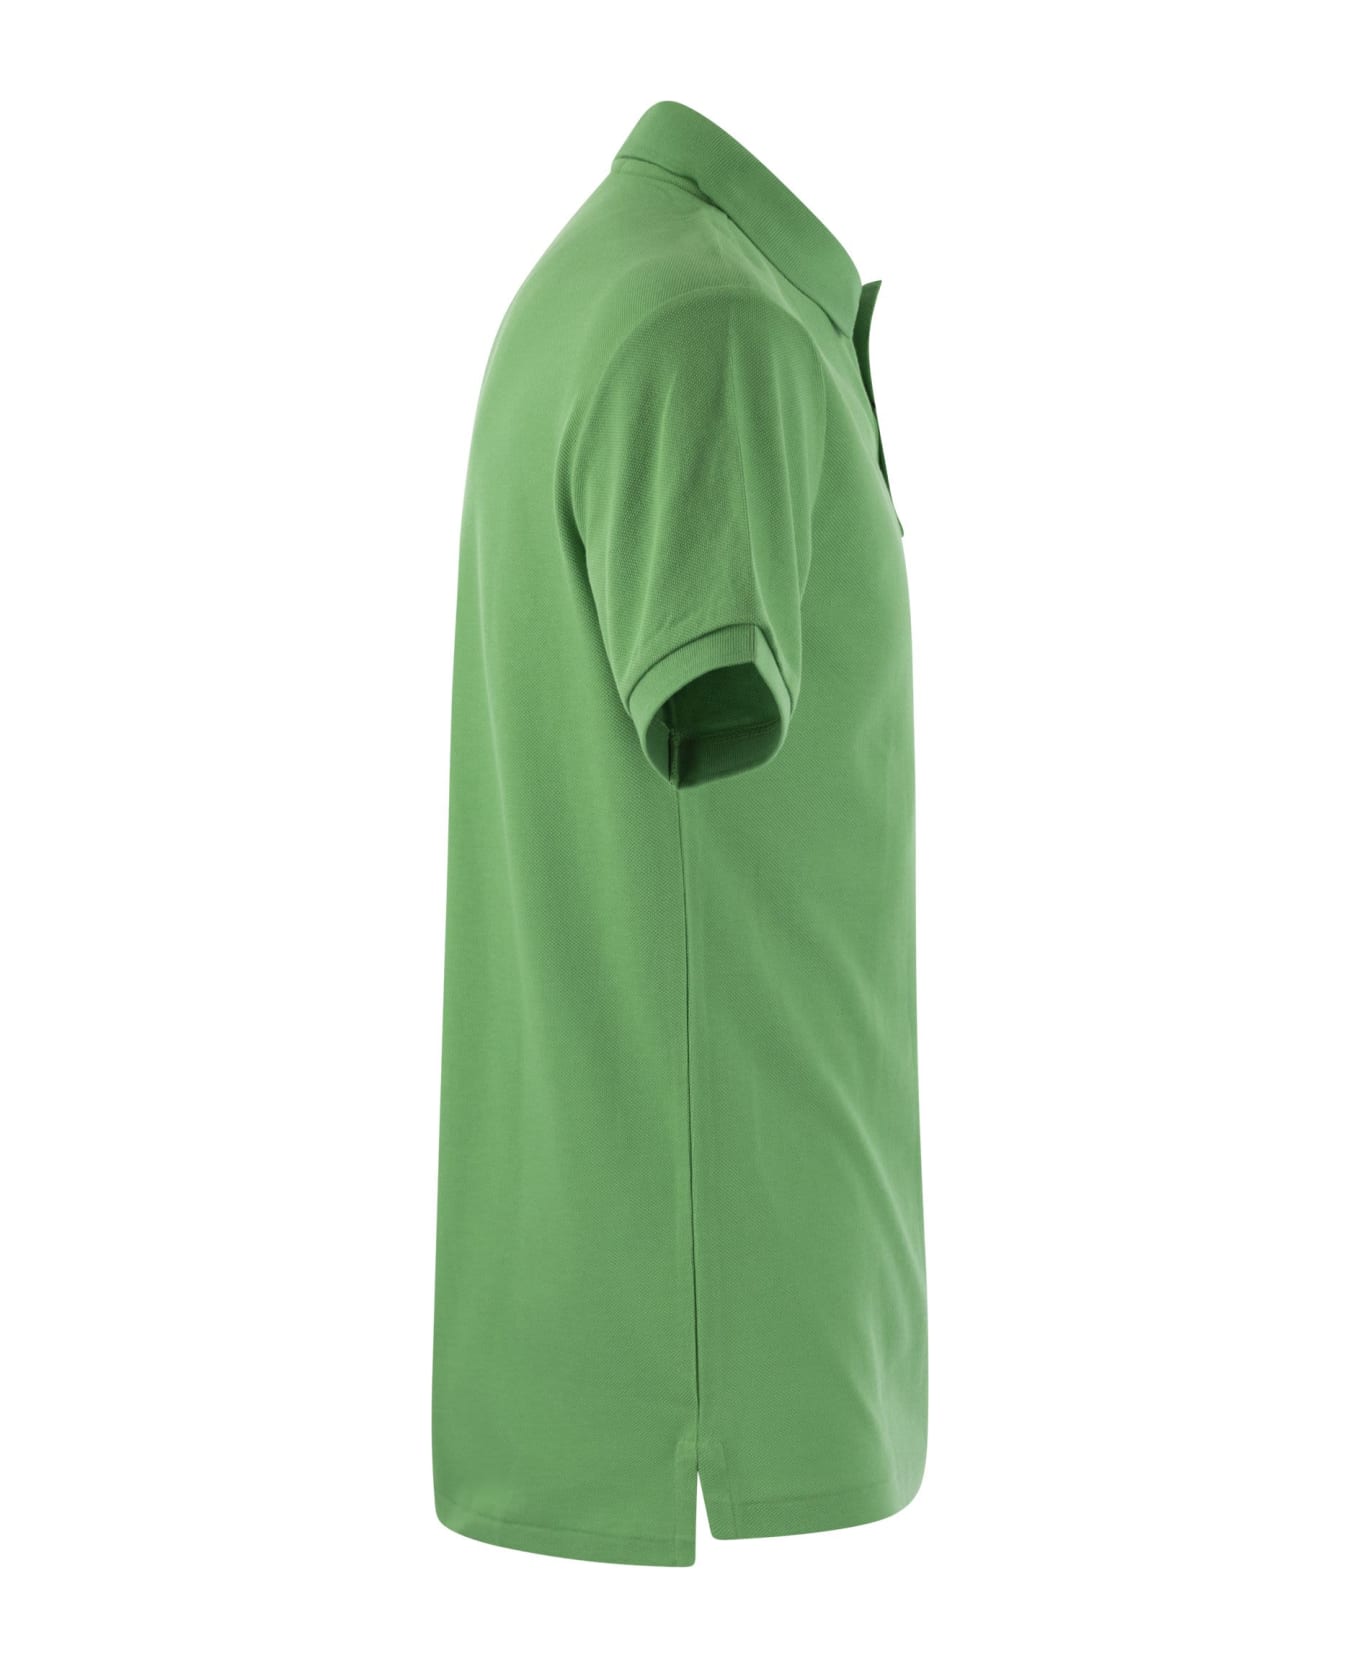 Polo Ralph Lauren Slim-fit Pique Polo Shirt - Green